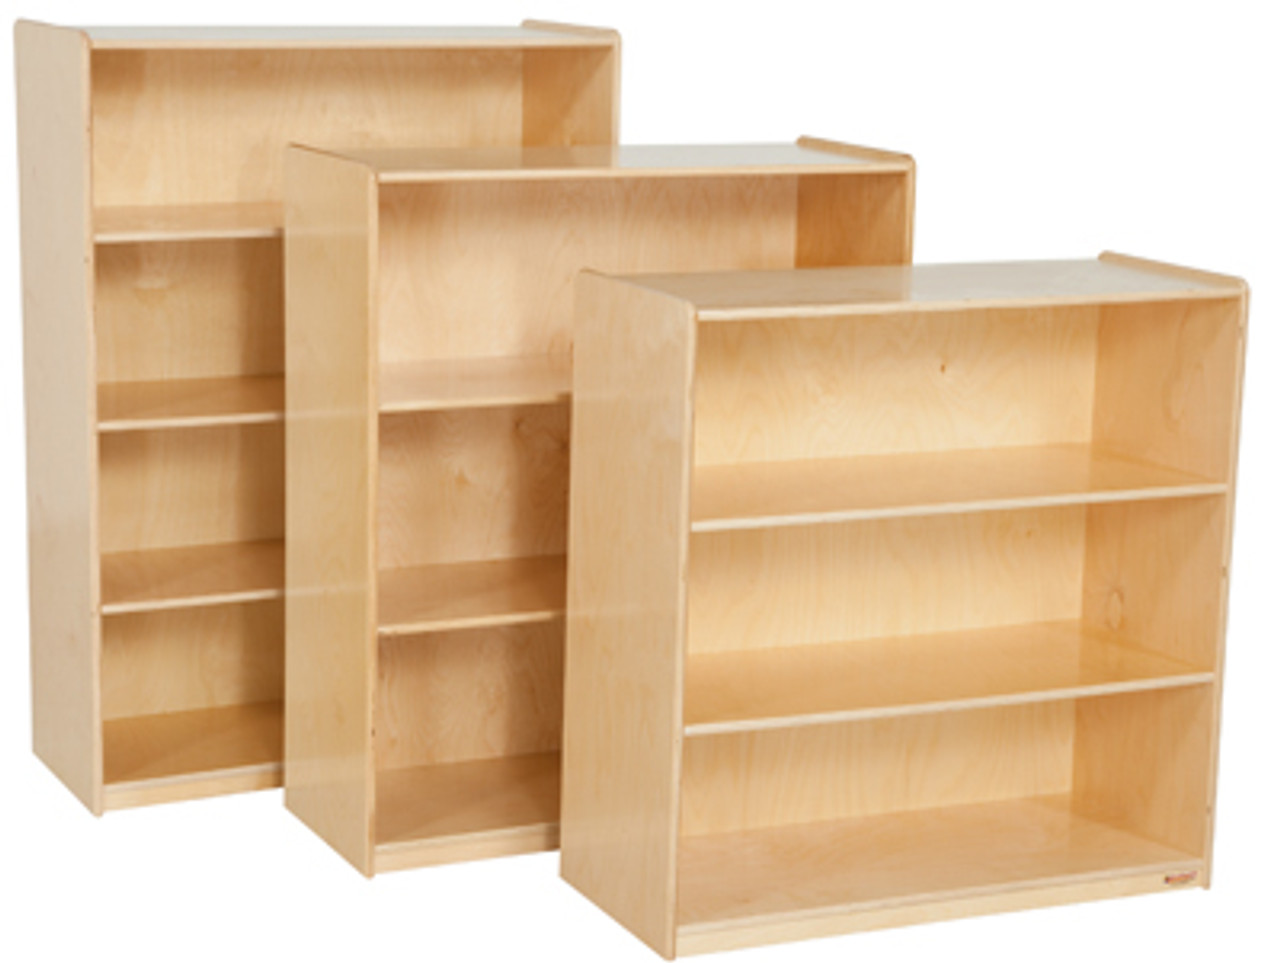 Wood Designs Wd13236 Multi Purpose Bookshelf 36 Inch Height Extra